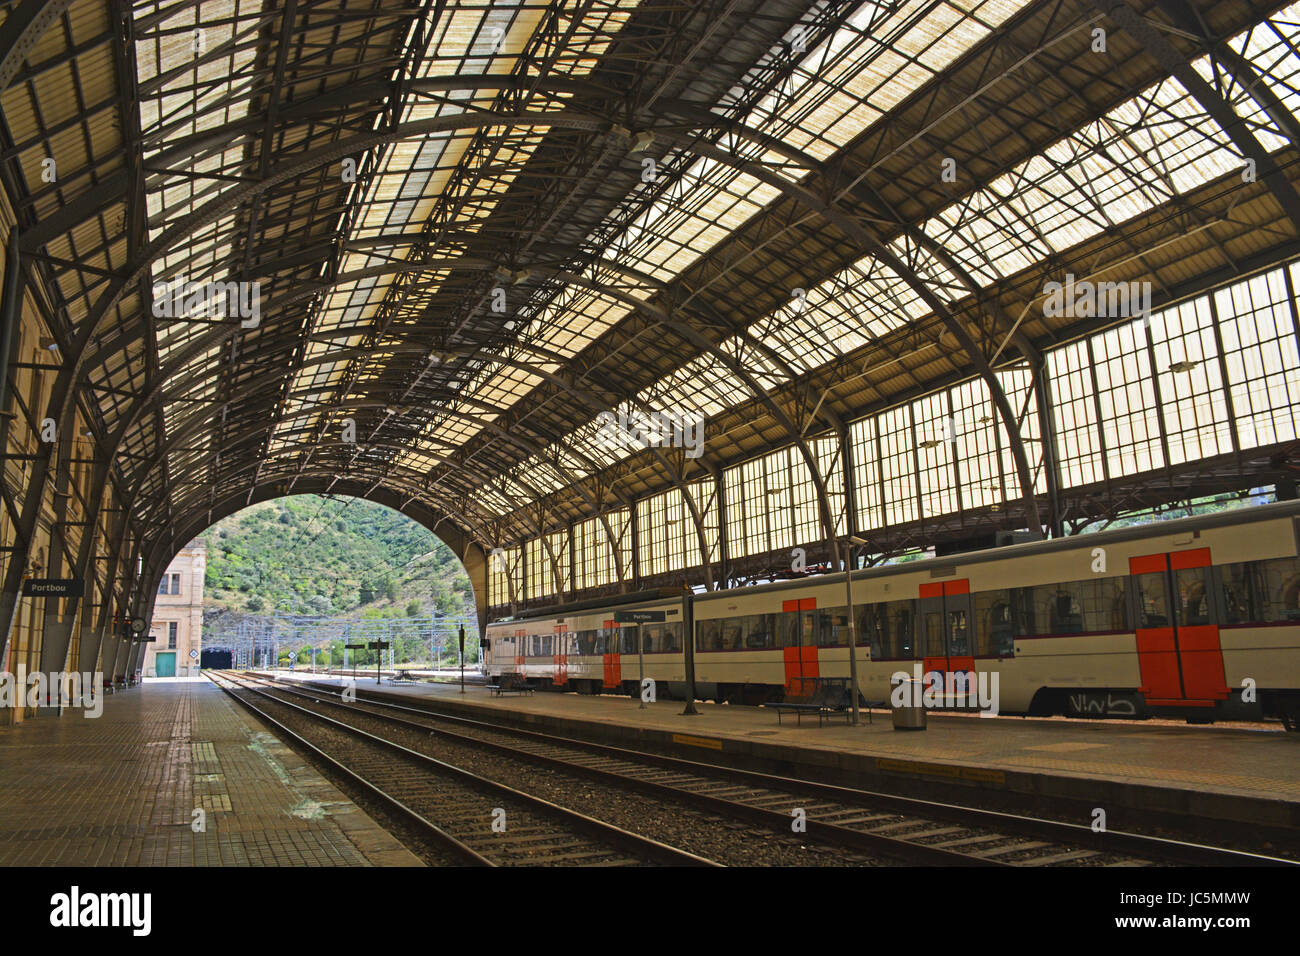 train in Portbou railway station, Spain Stock Photo